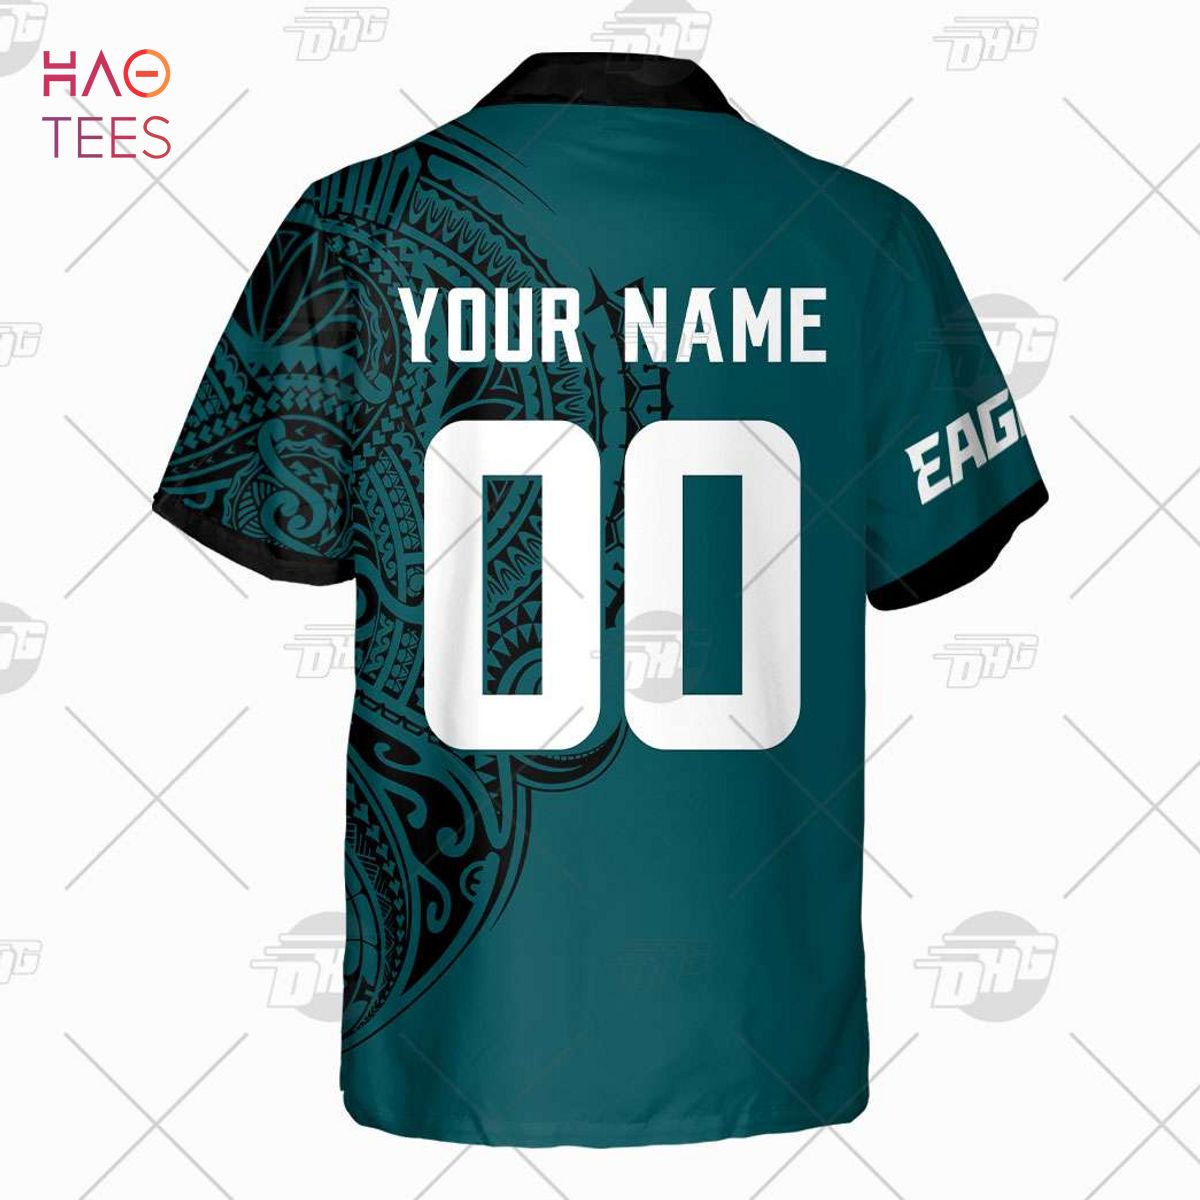 NFL Philadelphia Eagles Grateful Dead Hawaiian Shirt - Tagotee